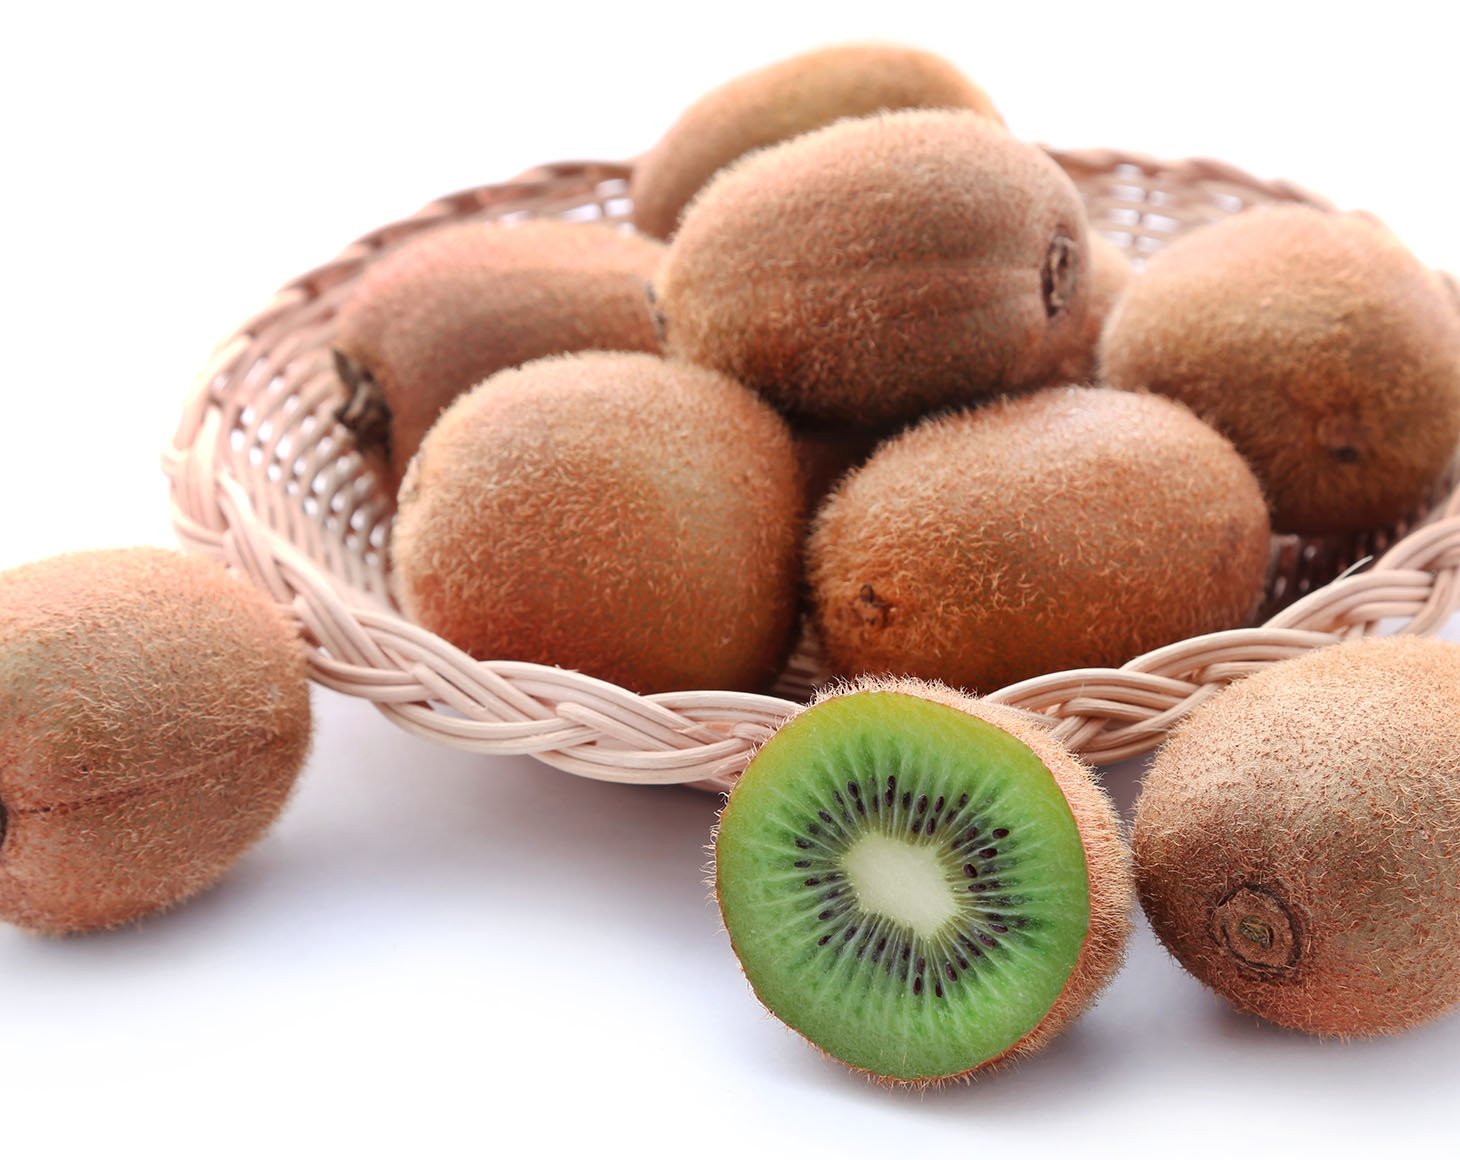 Kiwi fruits in a basket